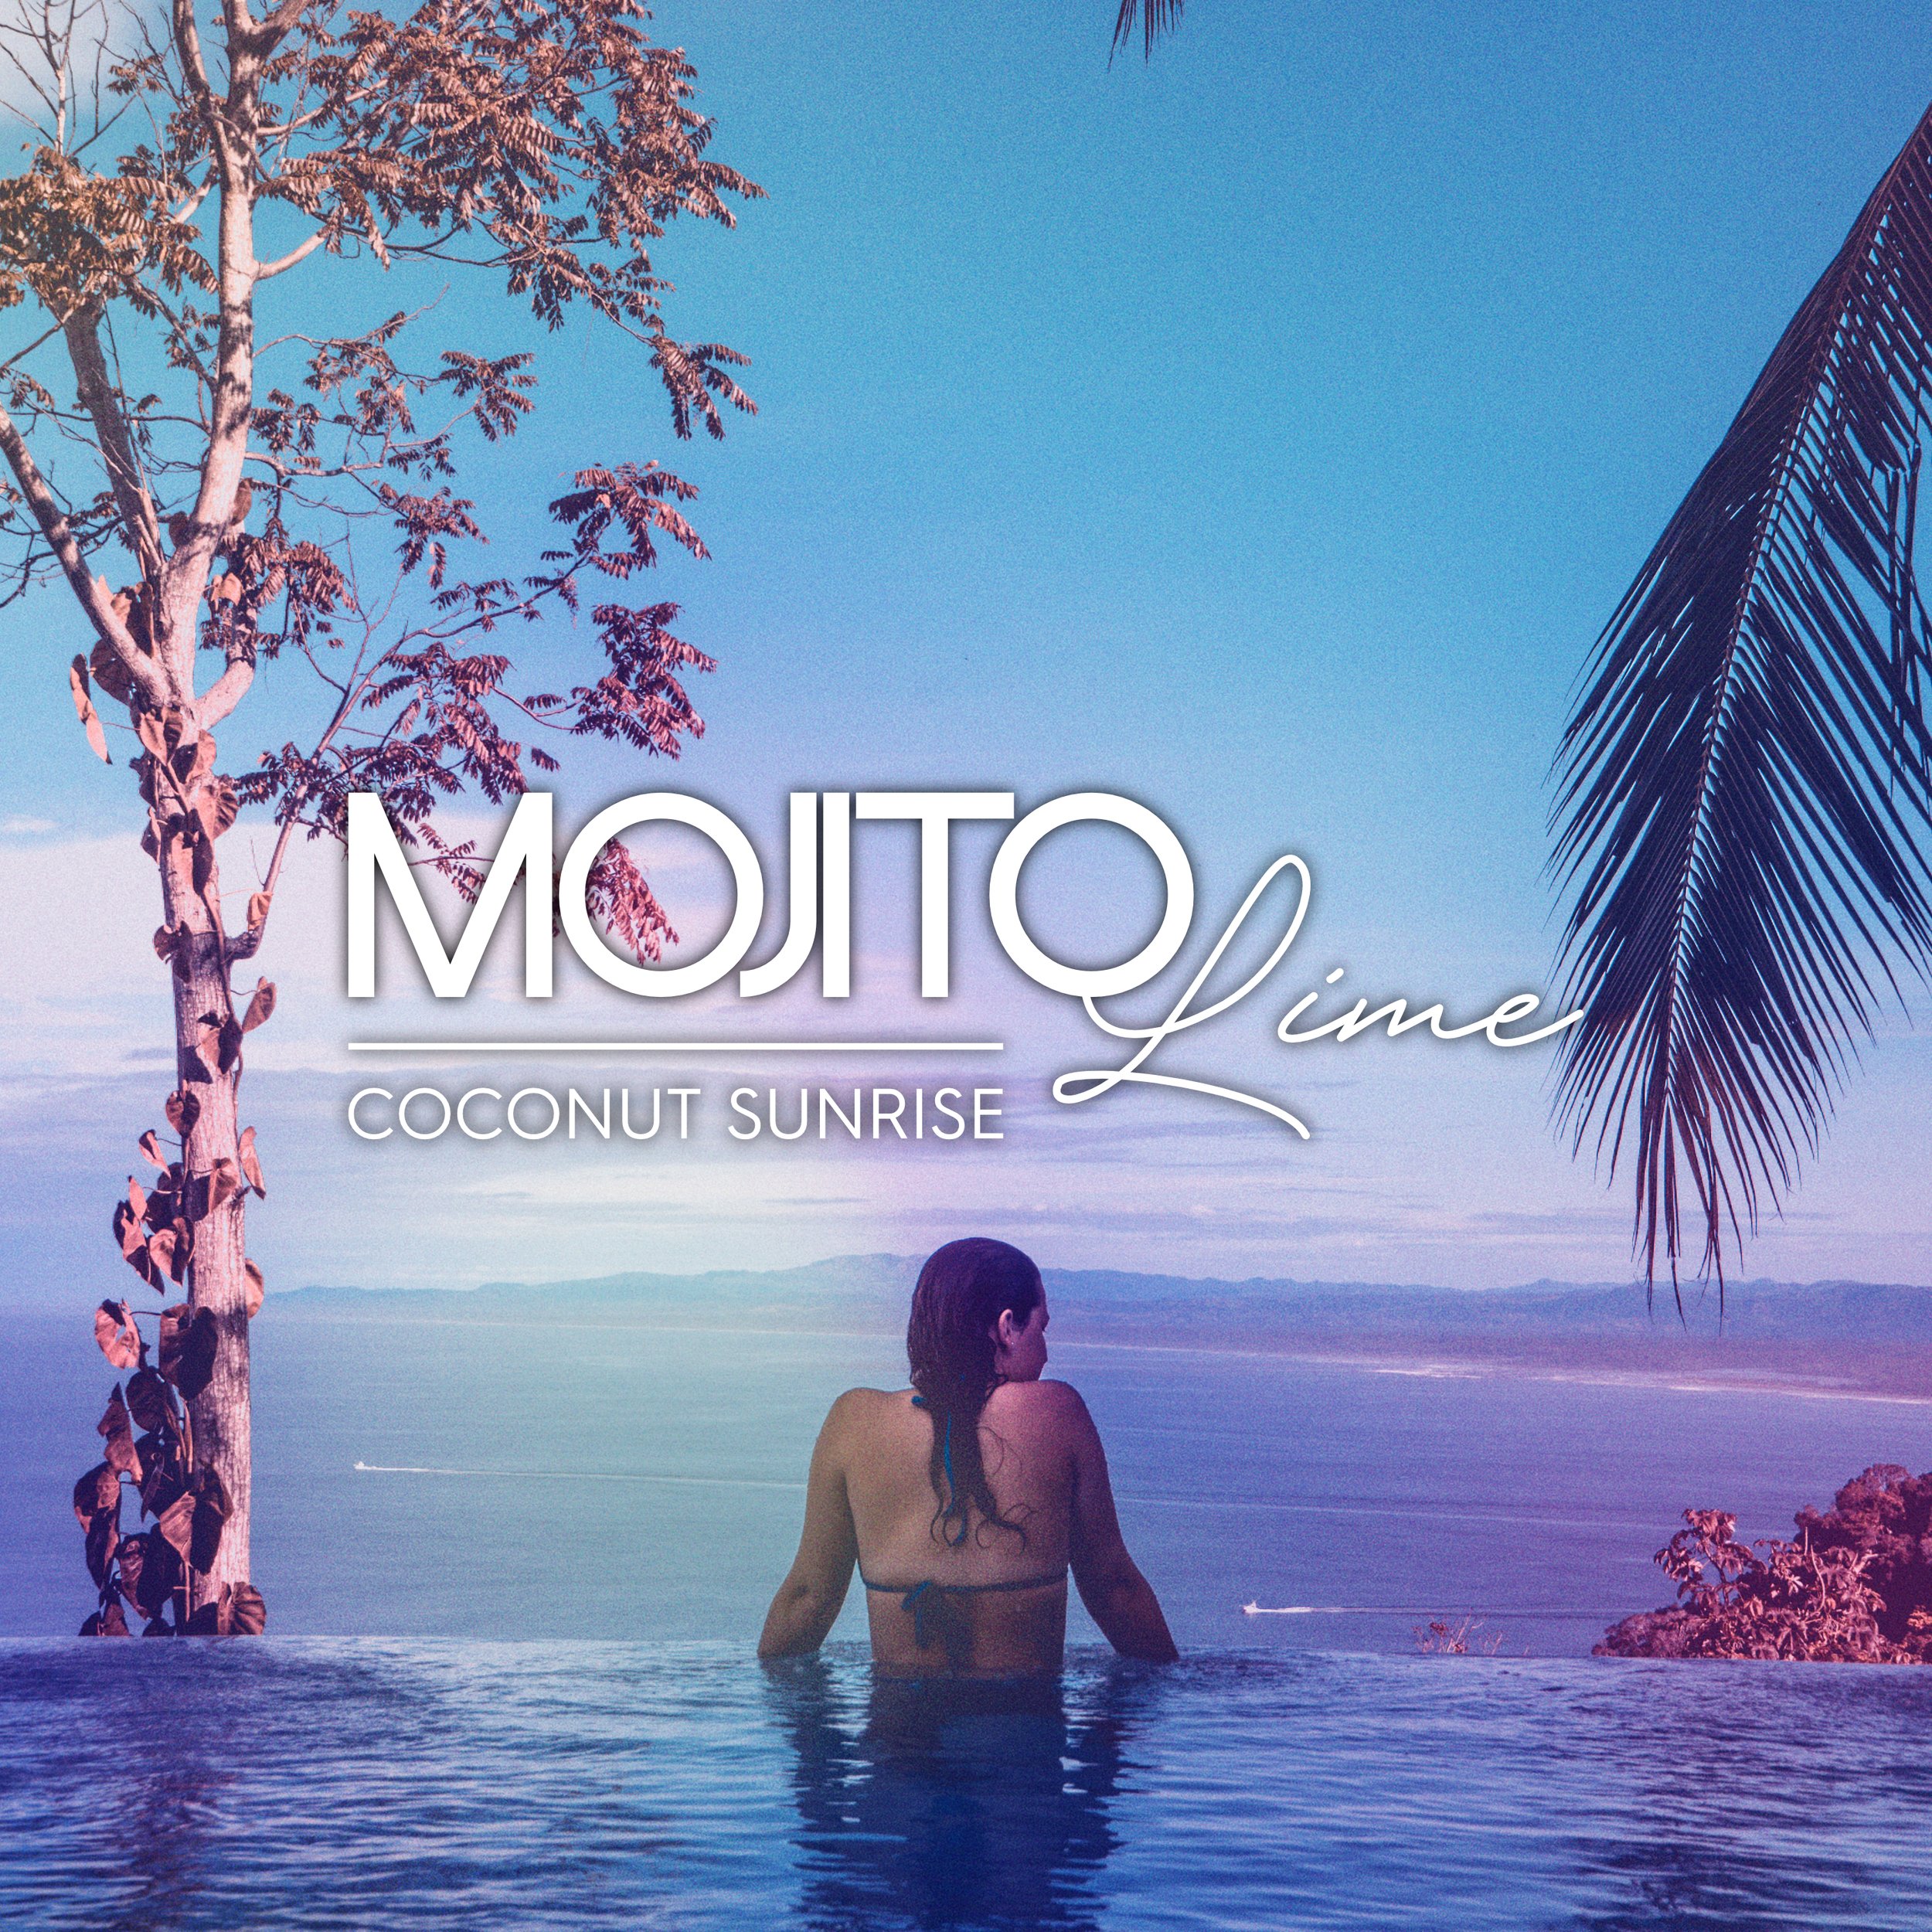 Mojito Lime - Coconut Sunrise - Artwork.jpg